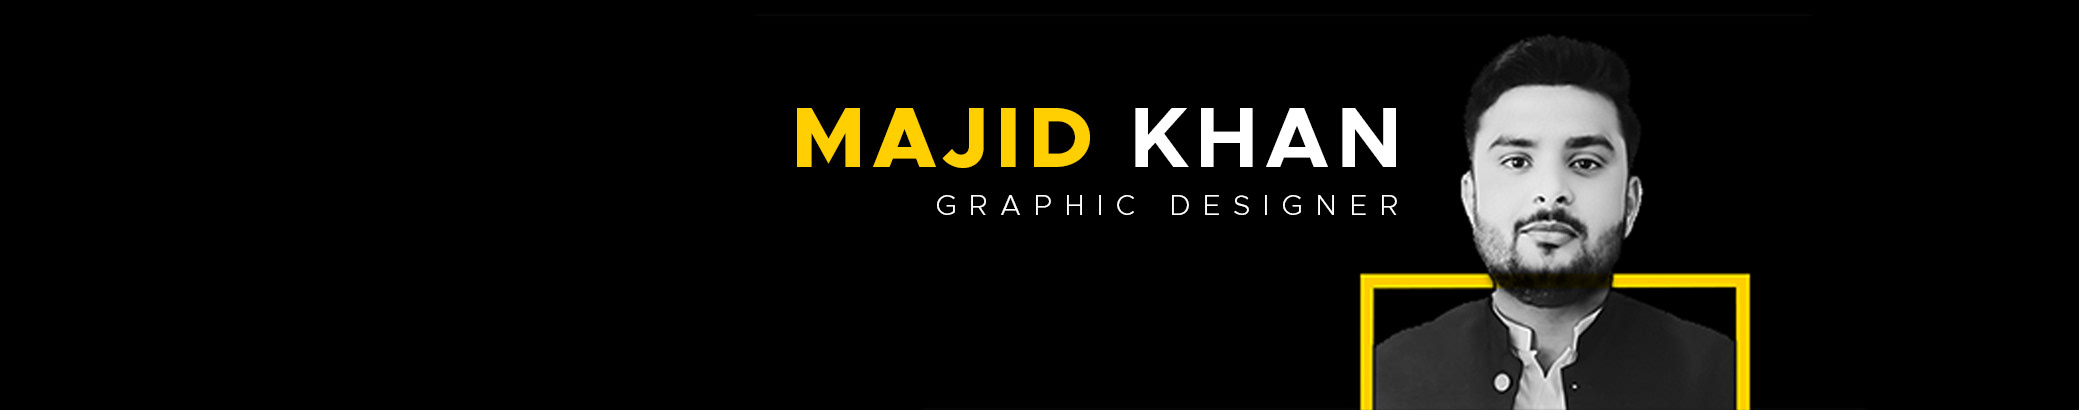 Majid Khan's profile banner